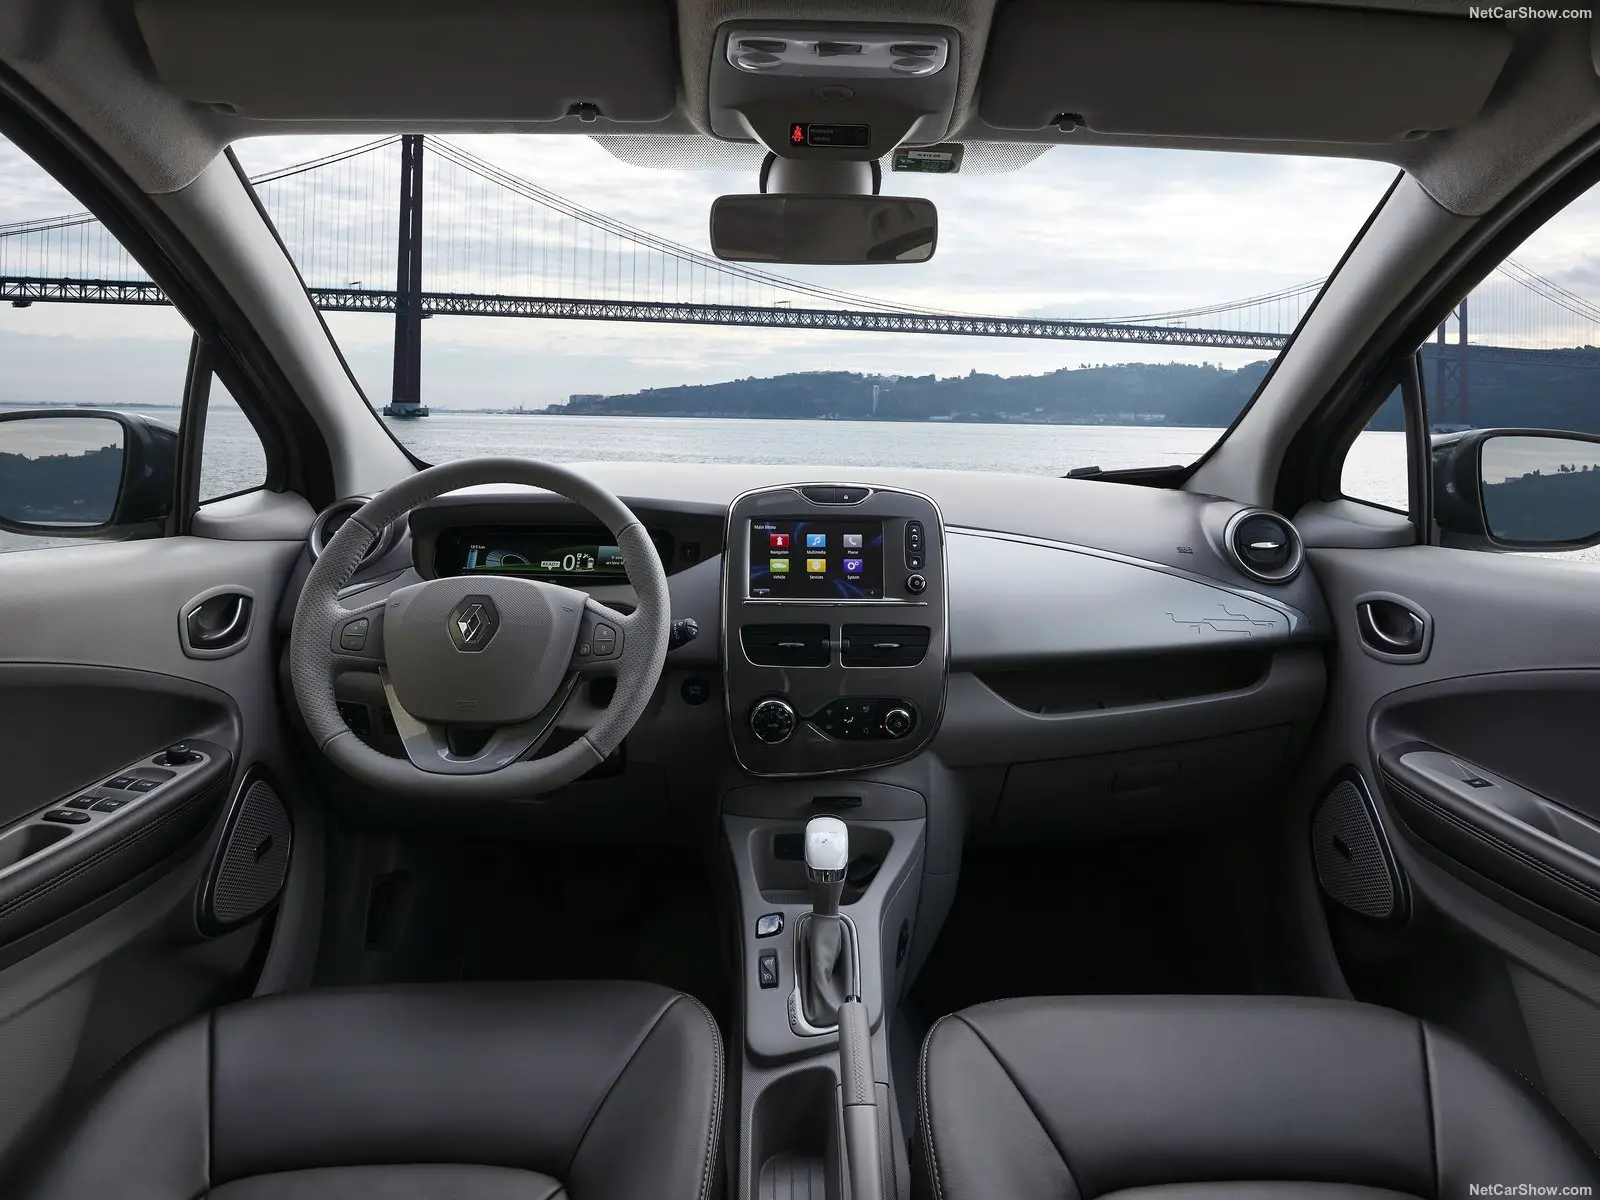 Renault Zoe interior front view